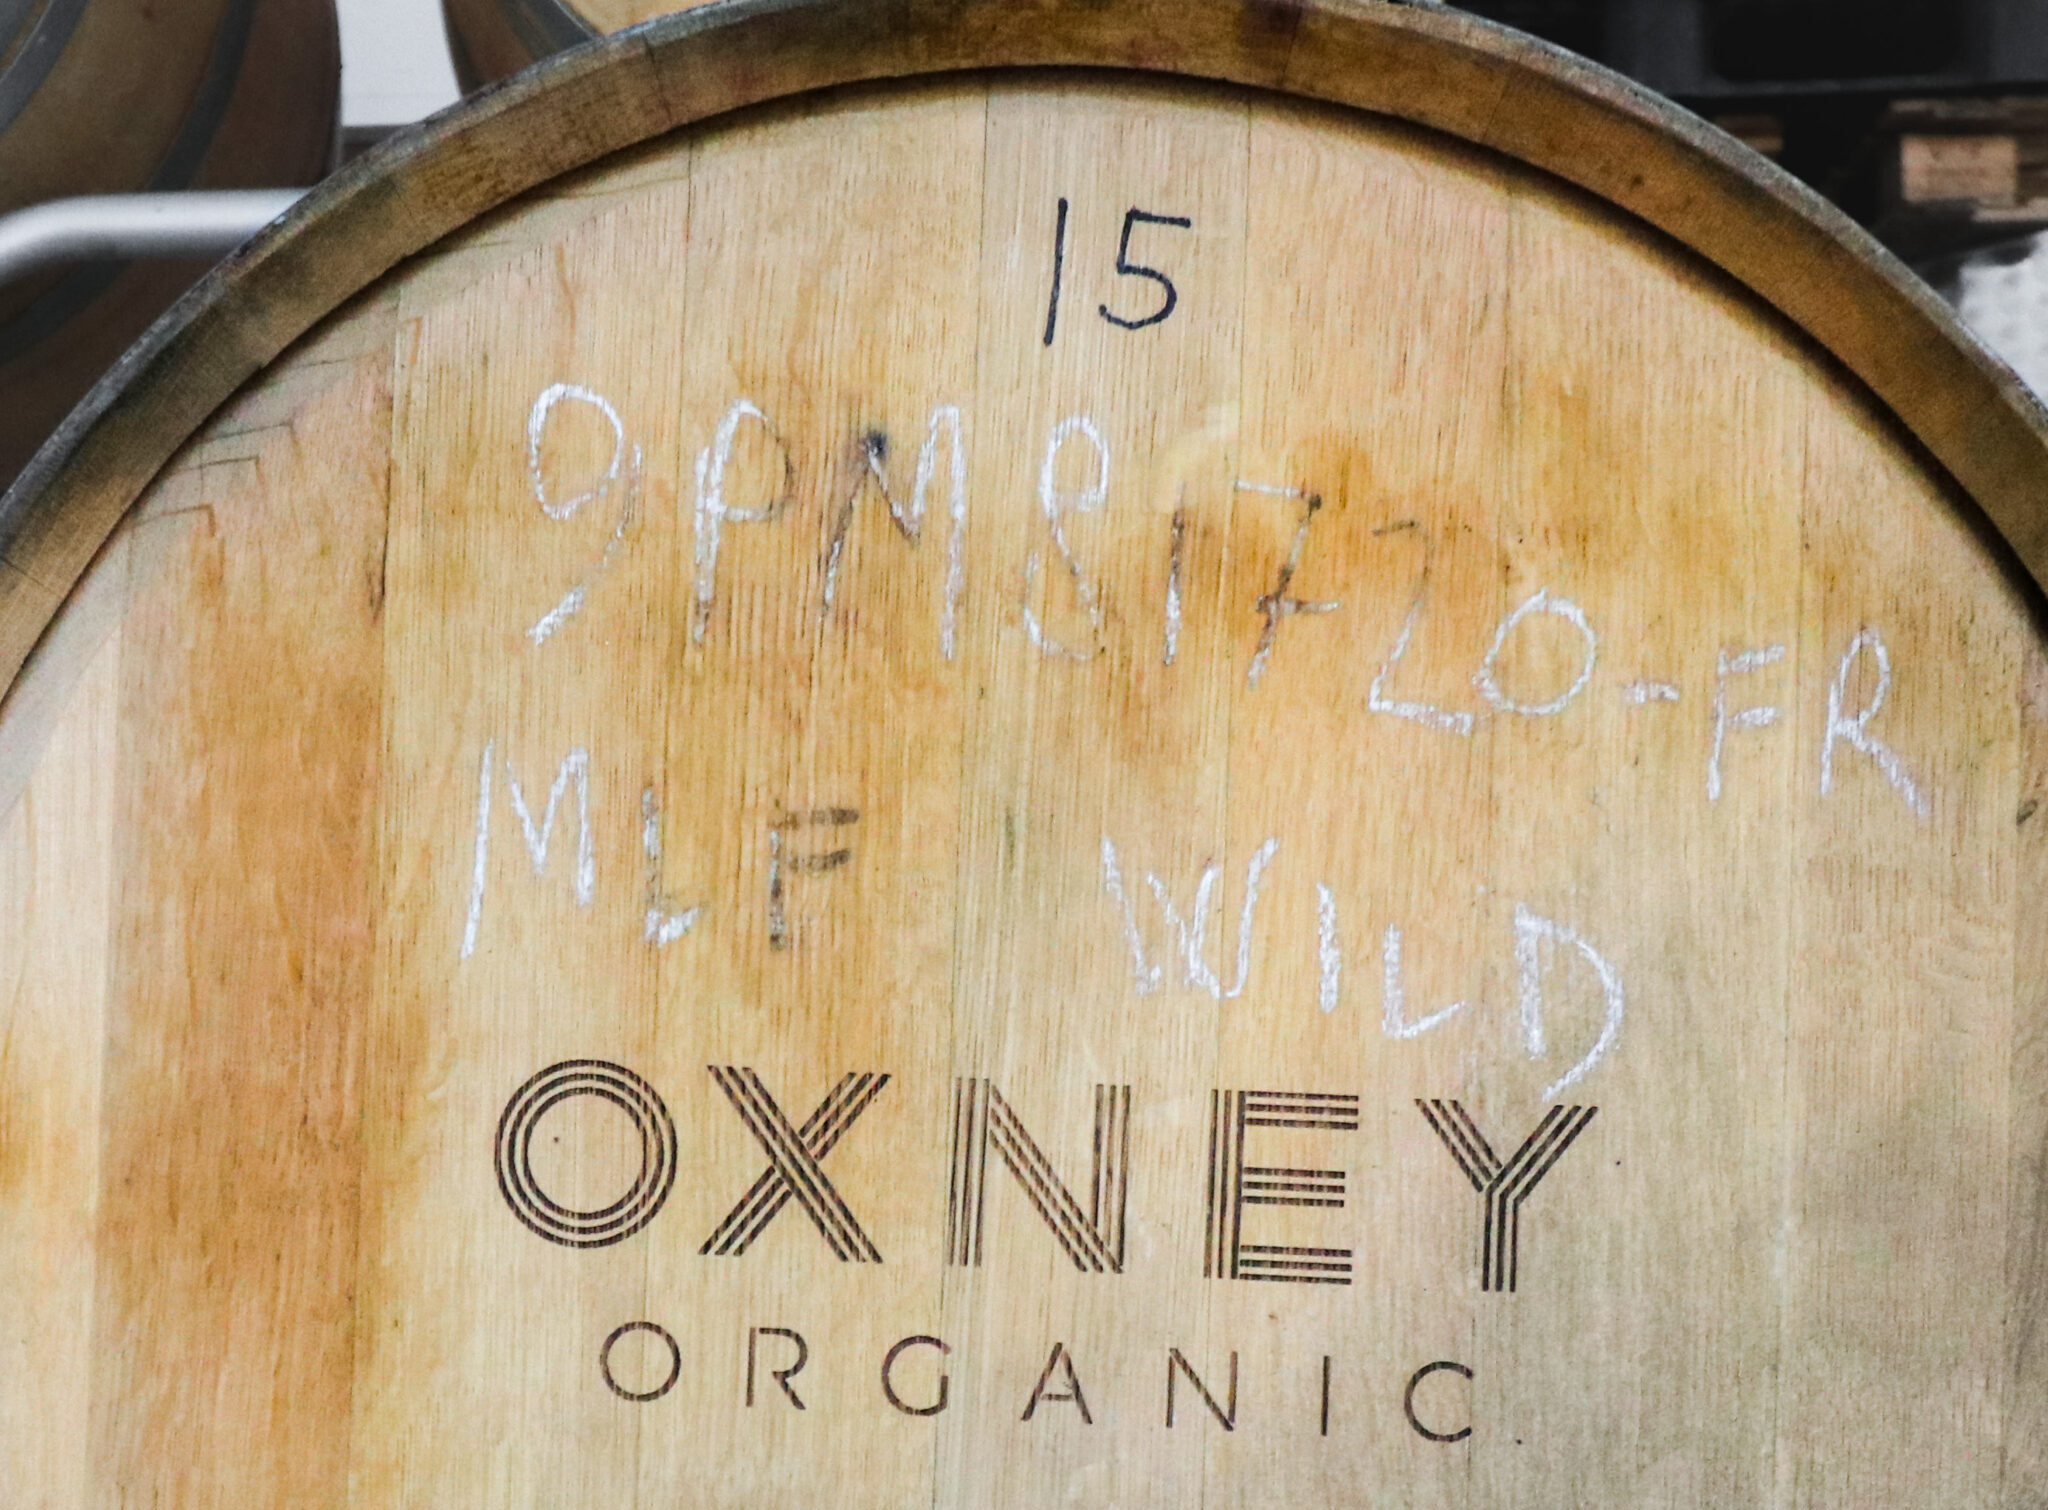 oxney organic estate low intervention English winemaker